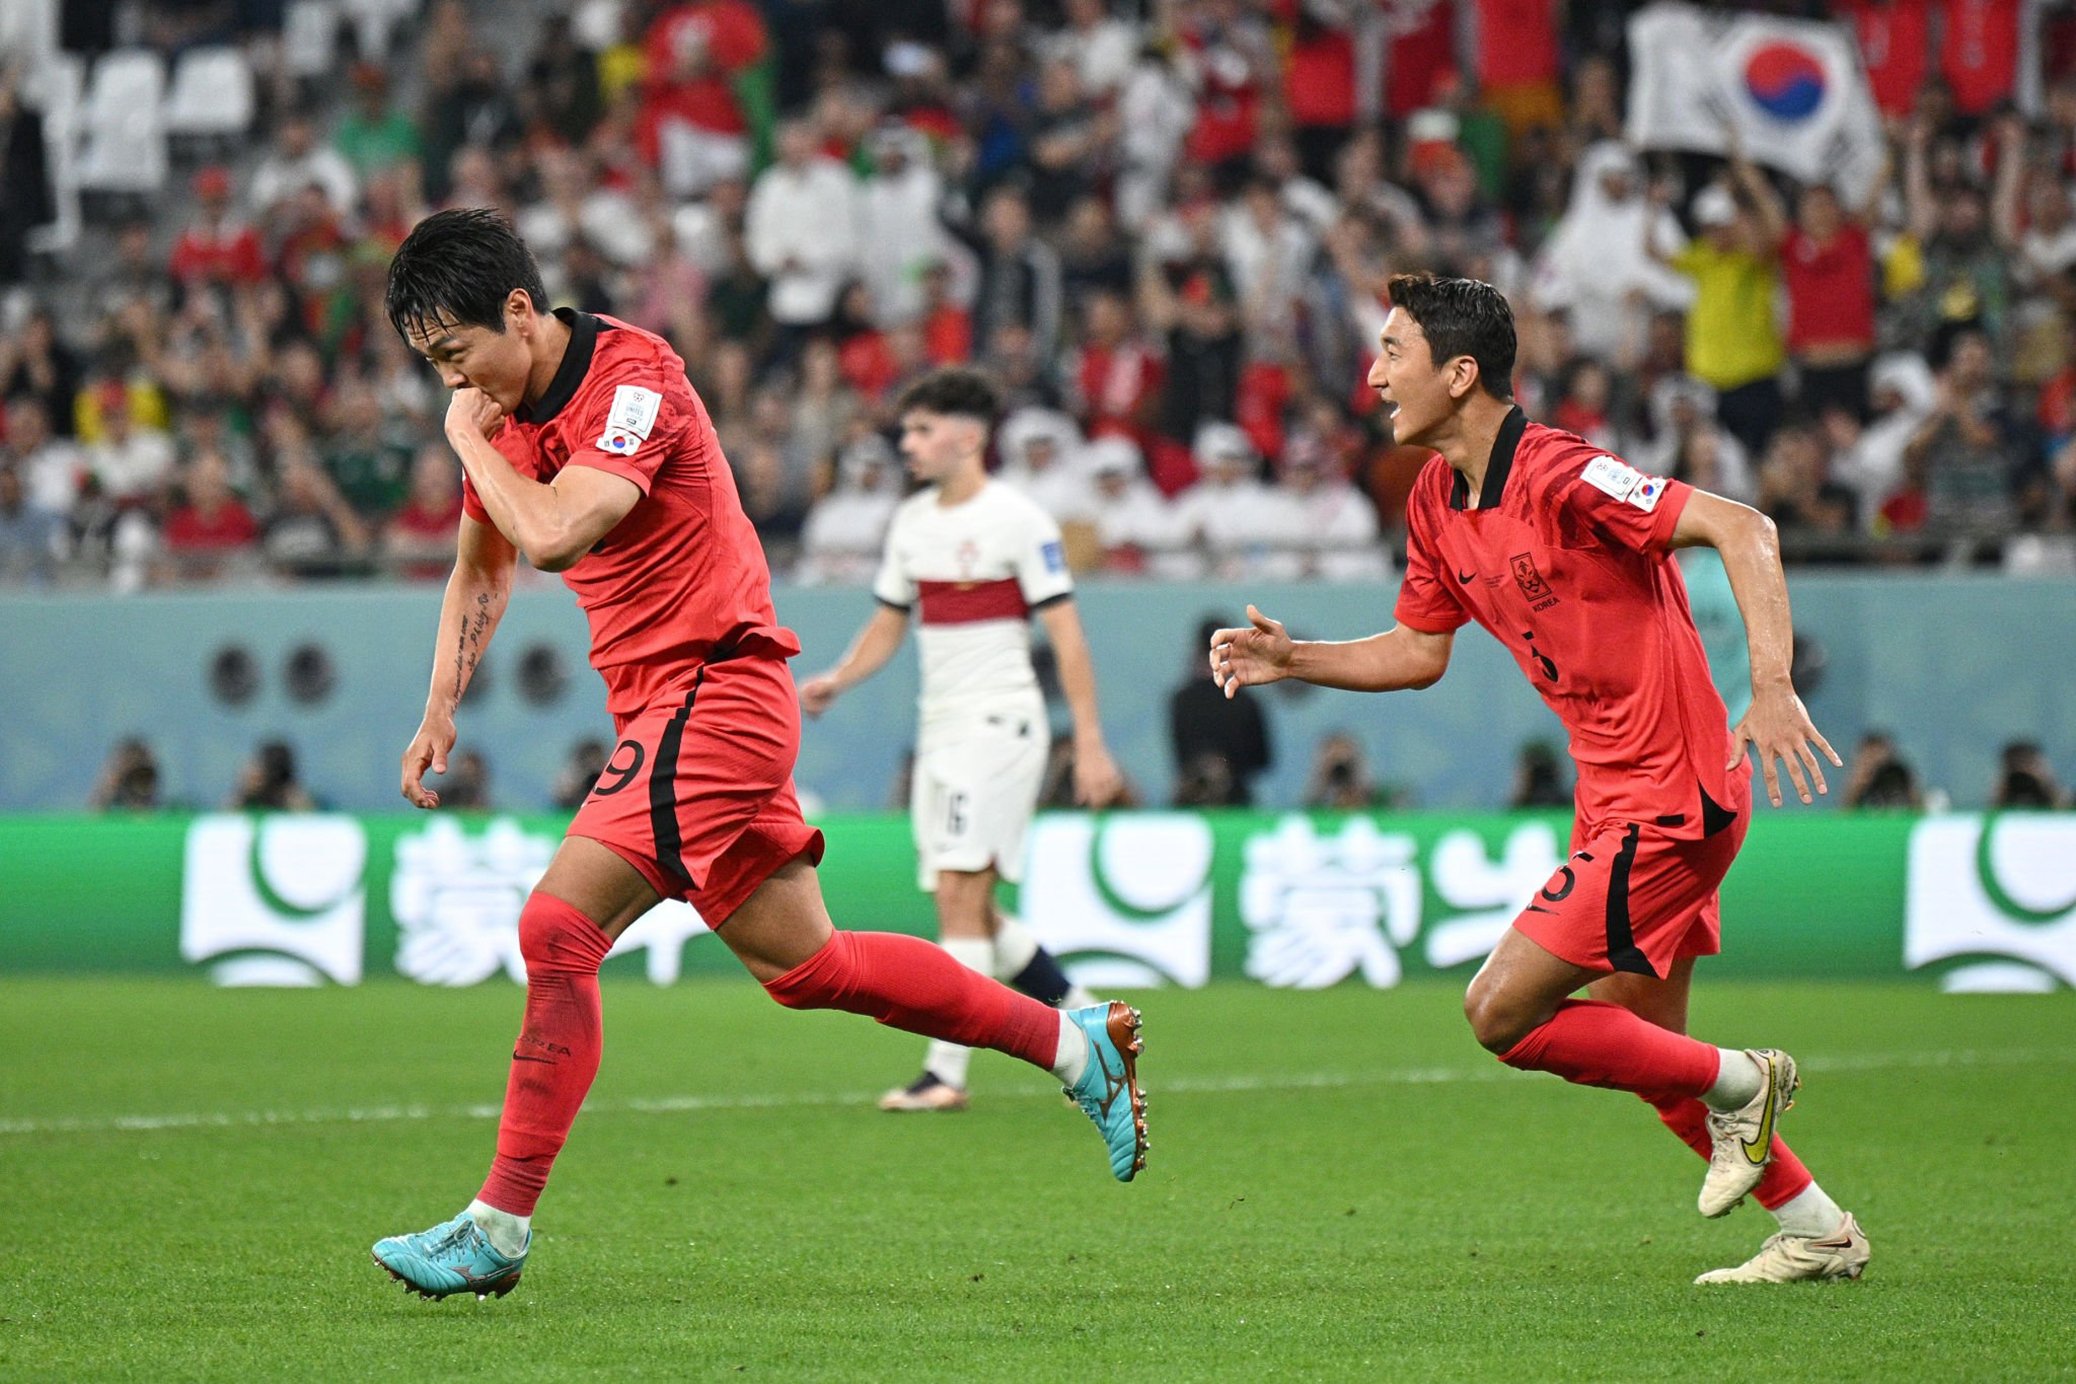 Dramatis! Kalahkan Portugal, Korea Melaju Ke 16 Besar Piala Dunia Qatar 2022